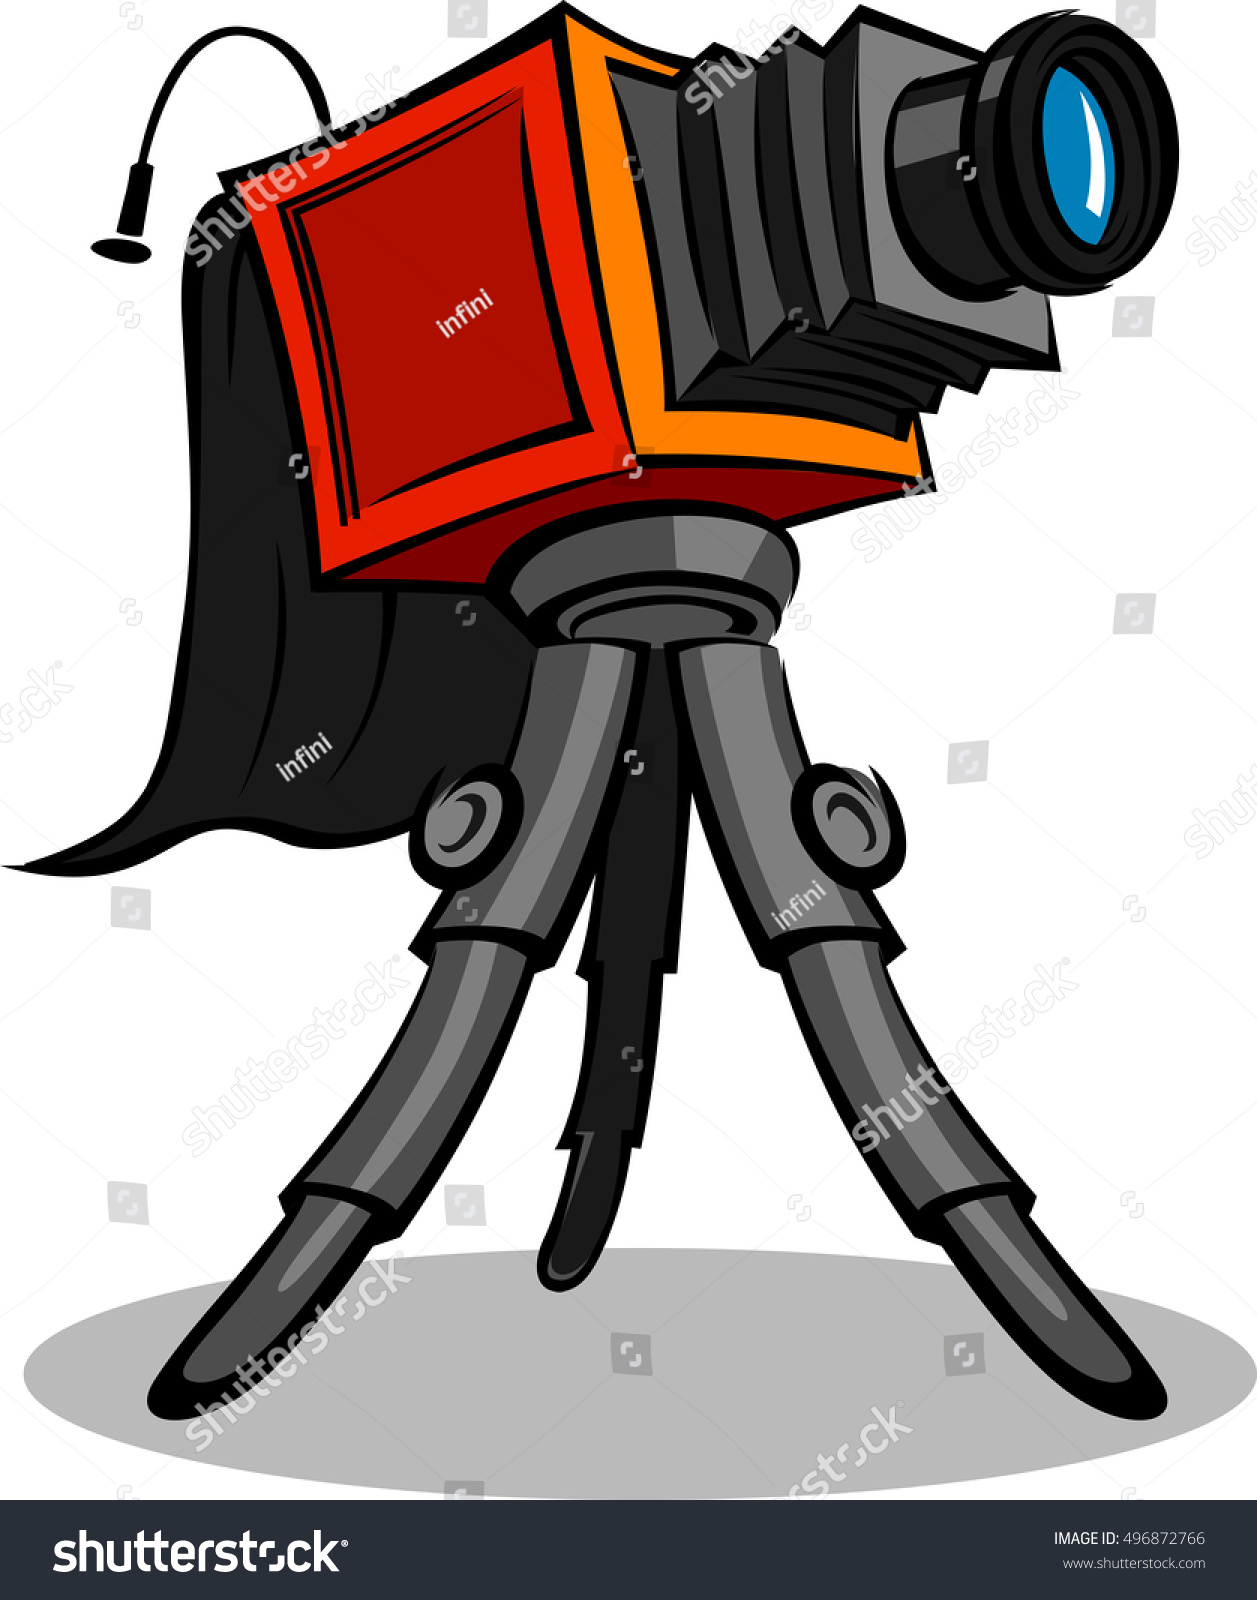 Old Retro Photo Camera Tripod Cartoon Stock Vector 496872766 - Shutterstock